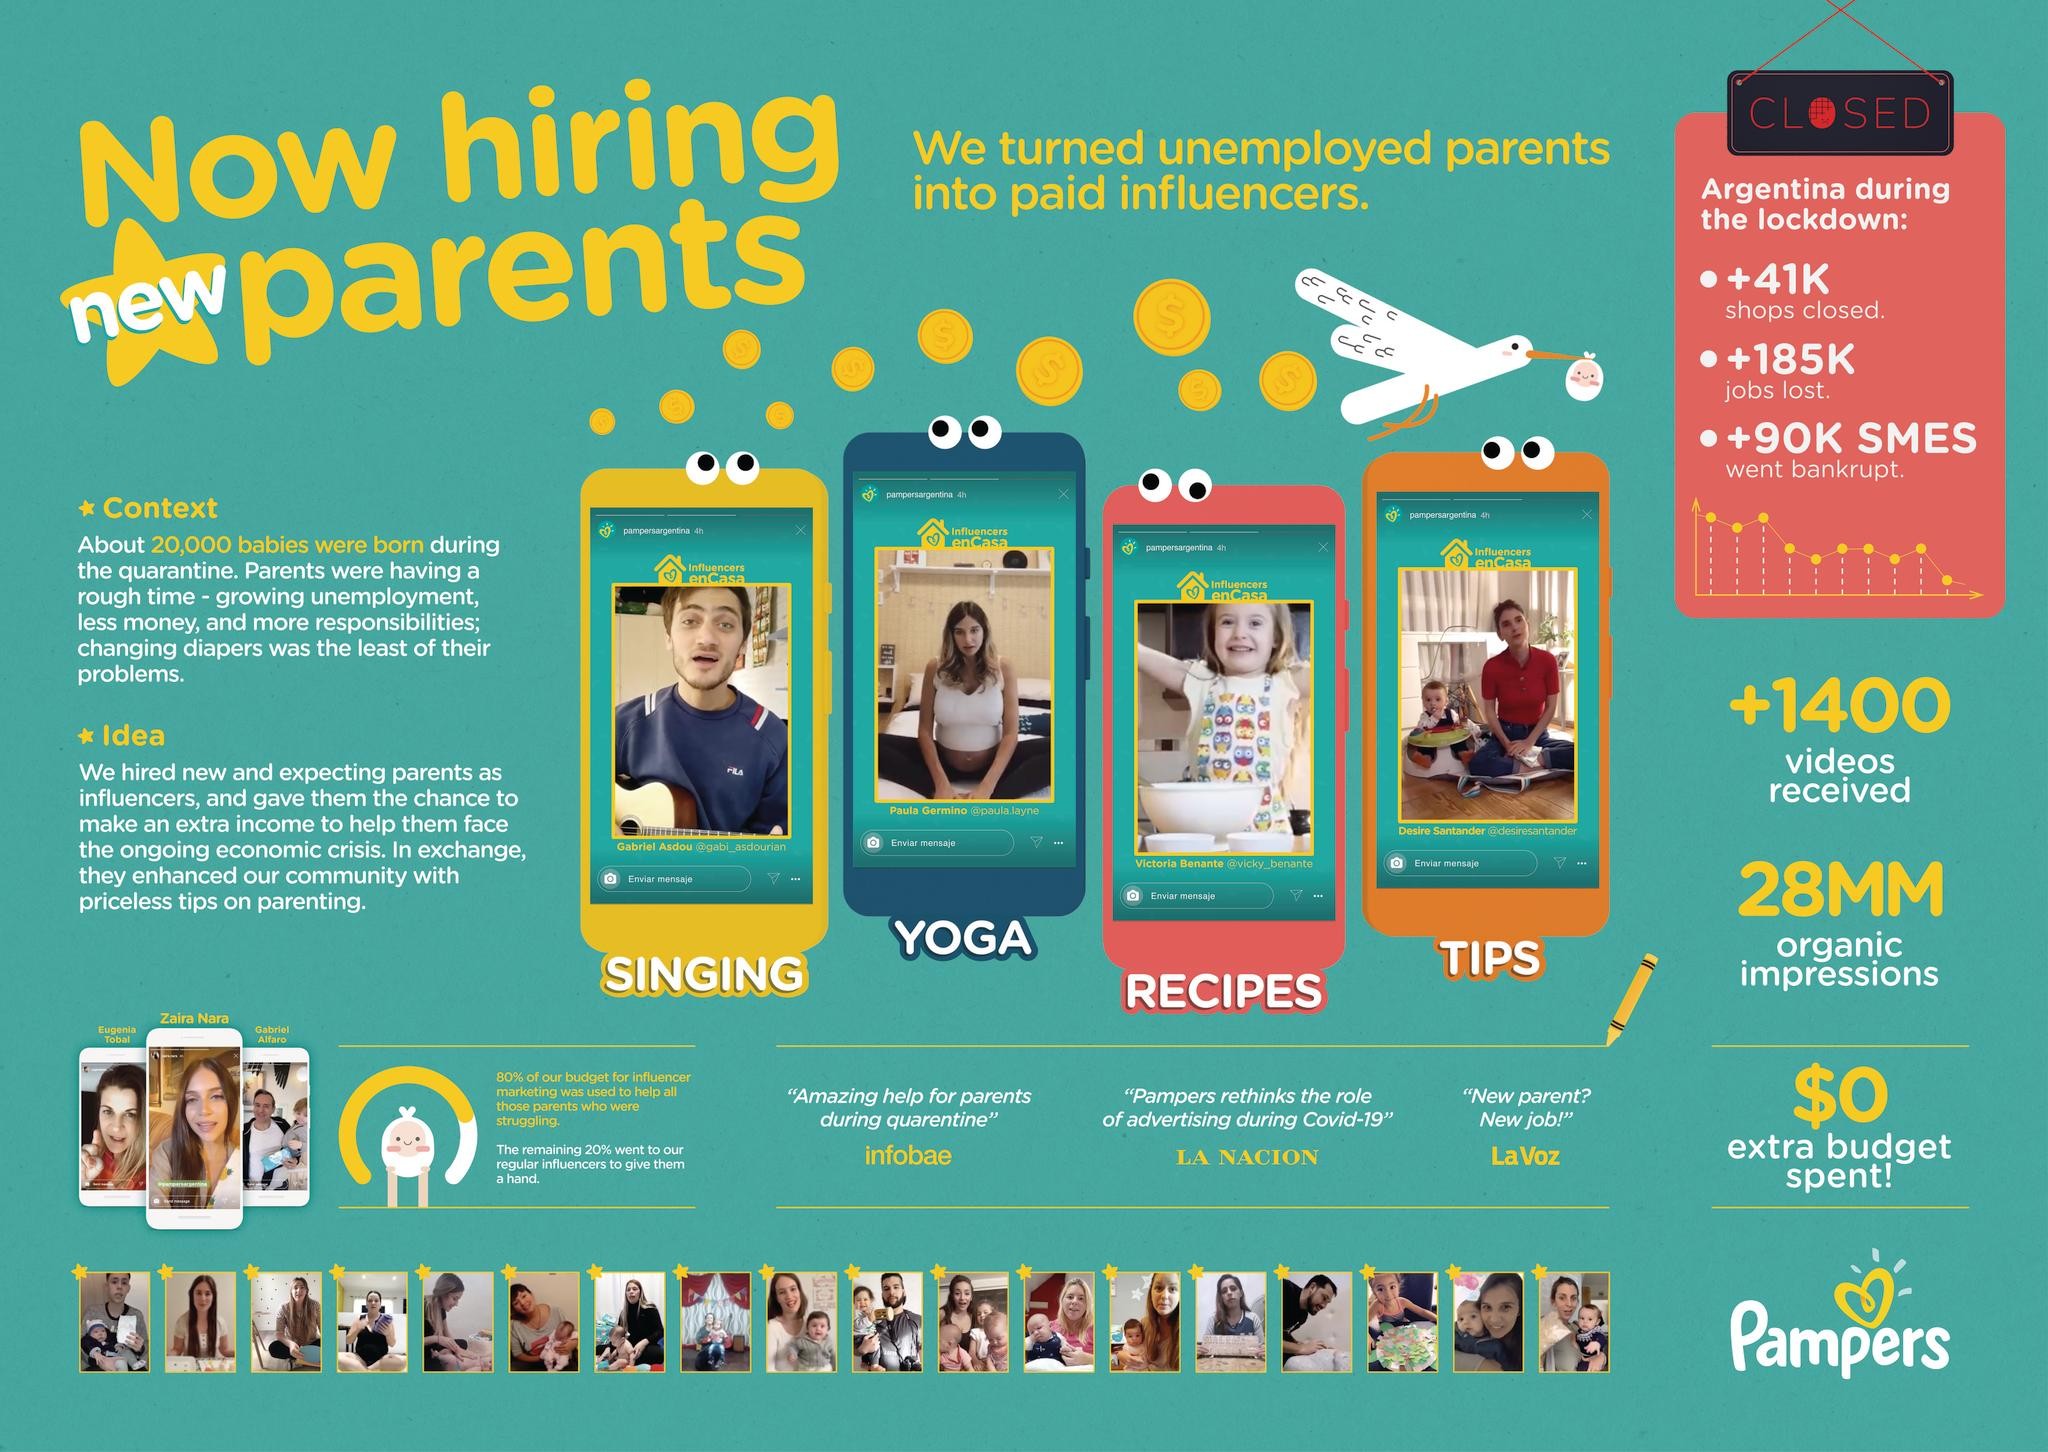 “Now hiring! New Parents” 